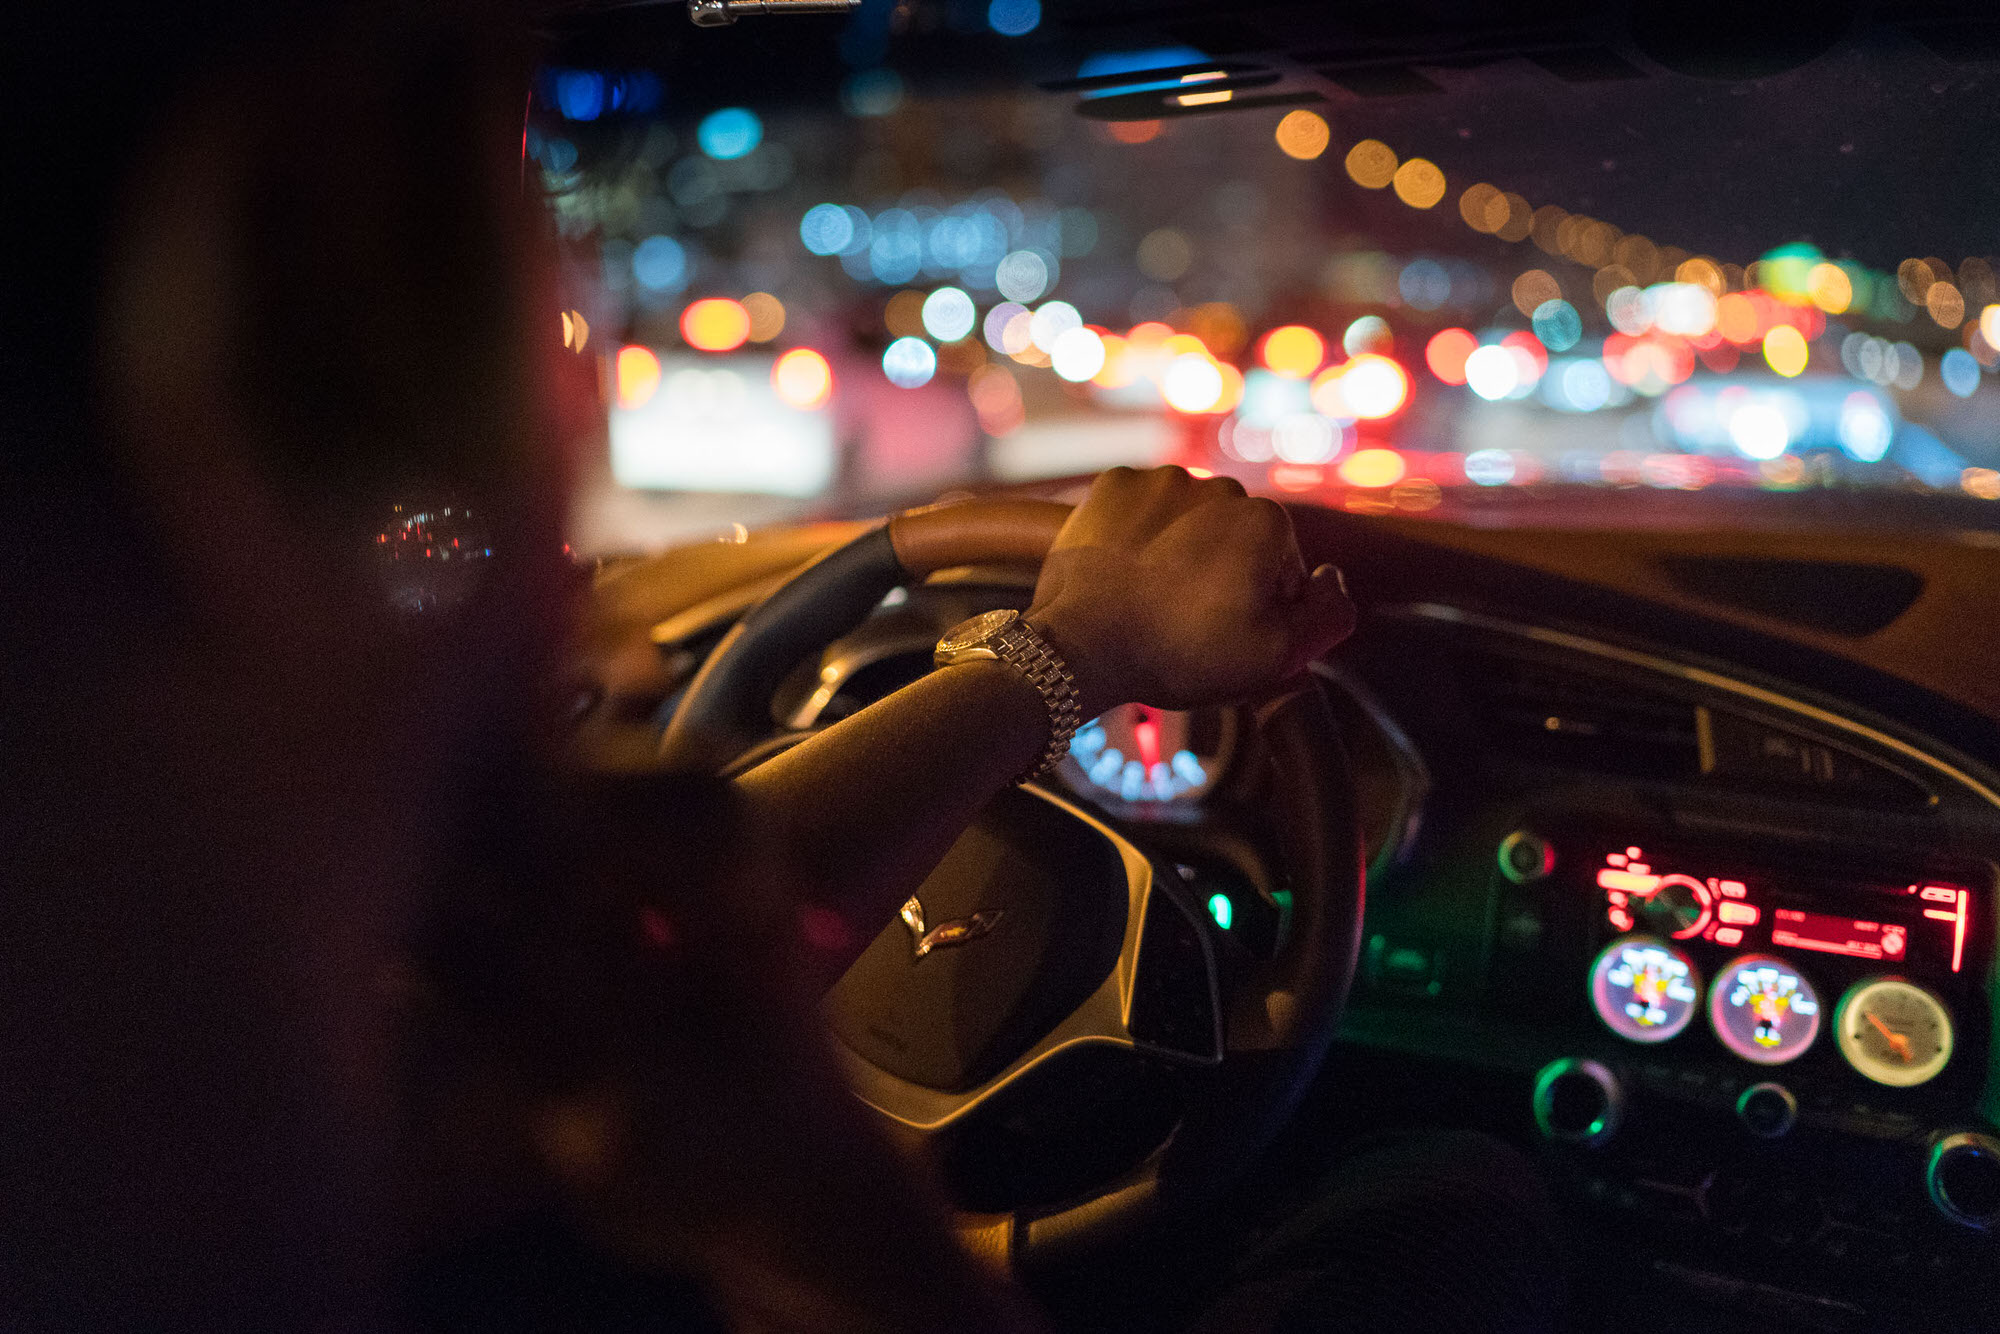 Donkmaster cruising the streets of Orlando, Florida at night